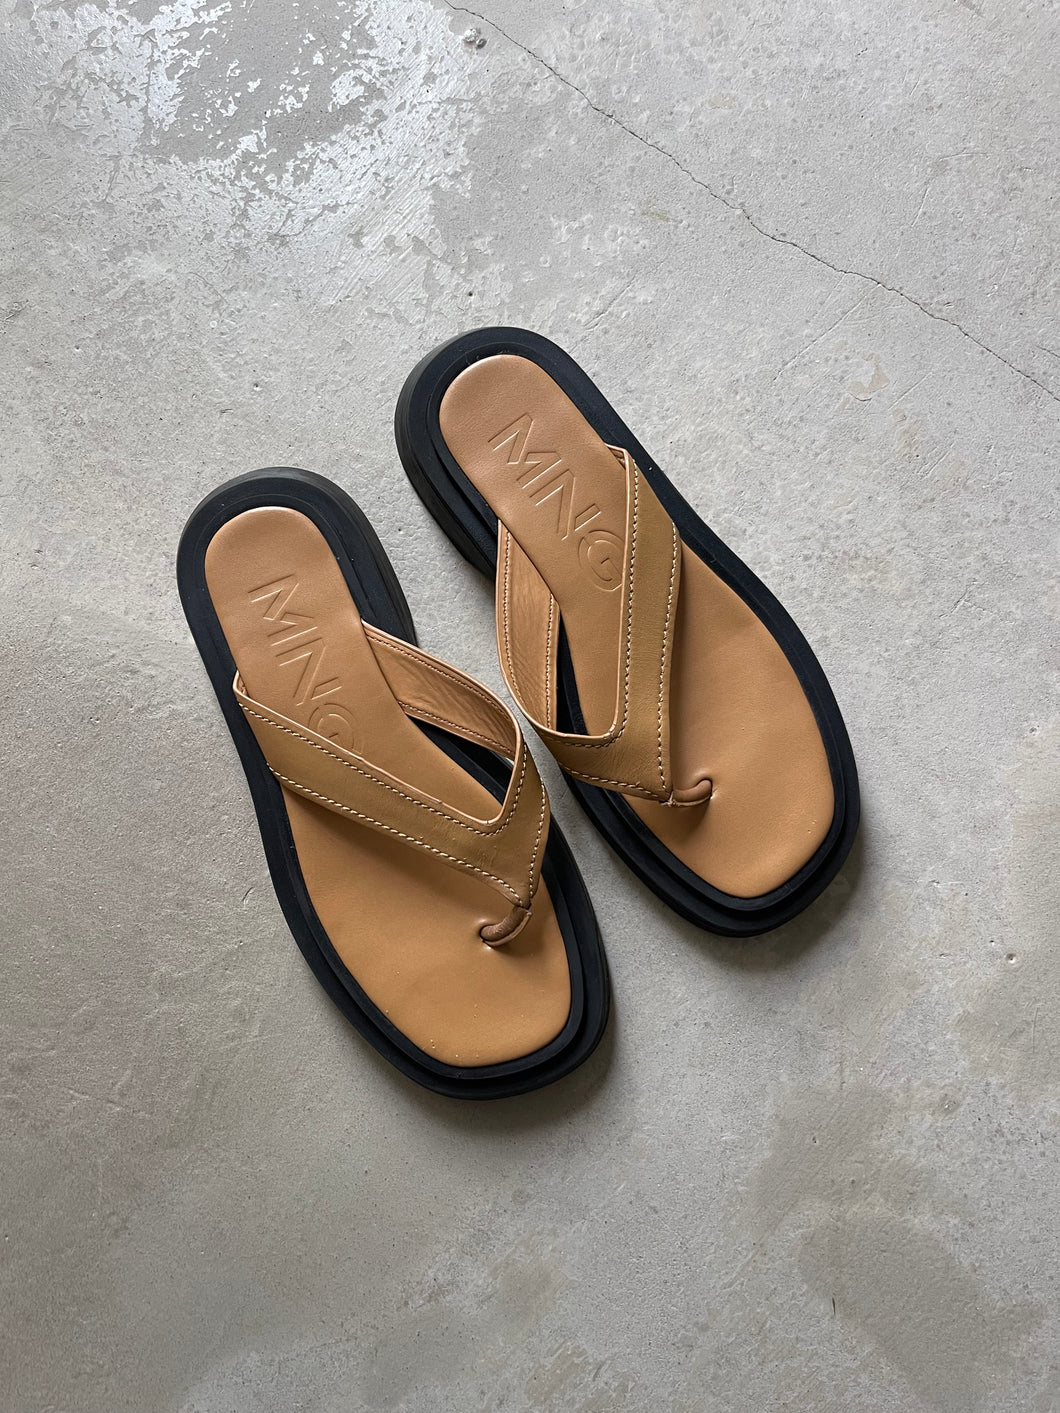 Mango Sandals - UK 5